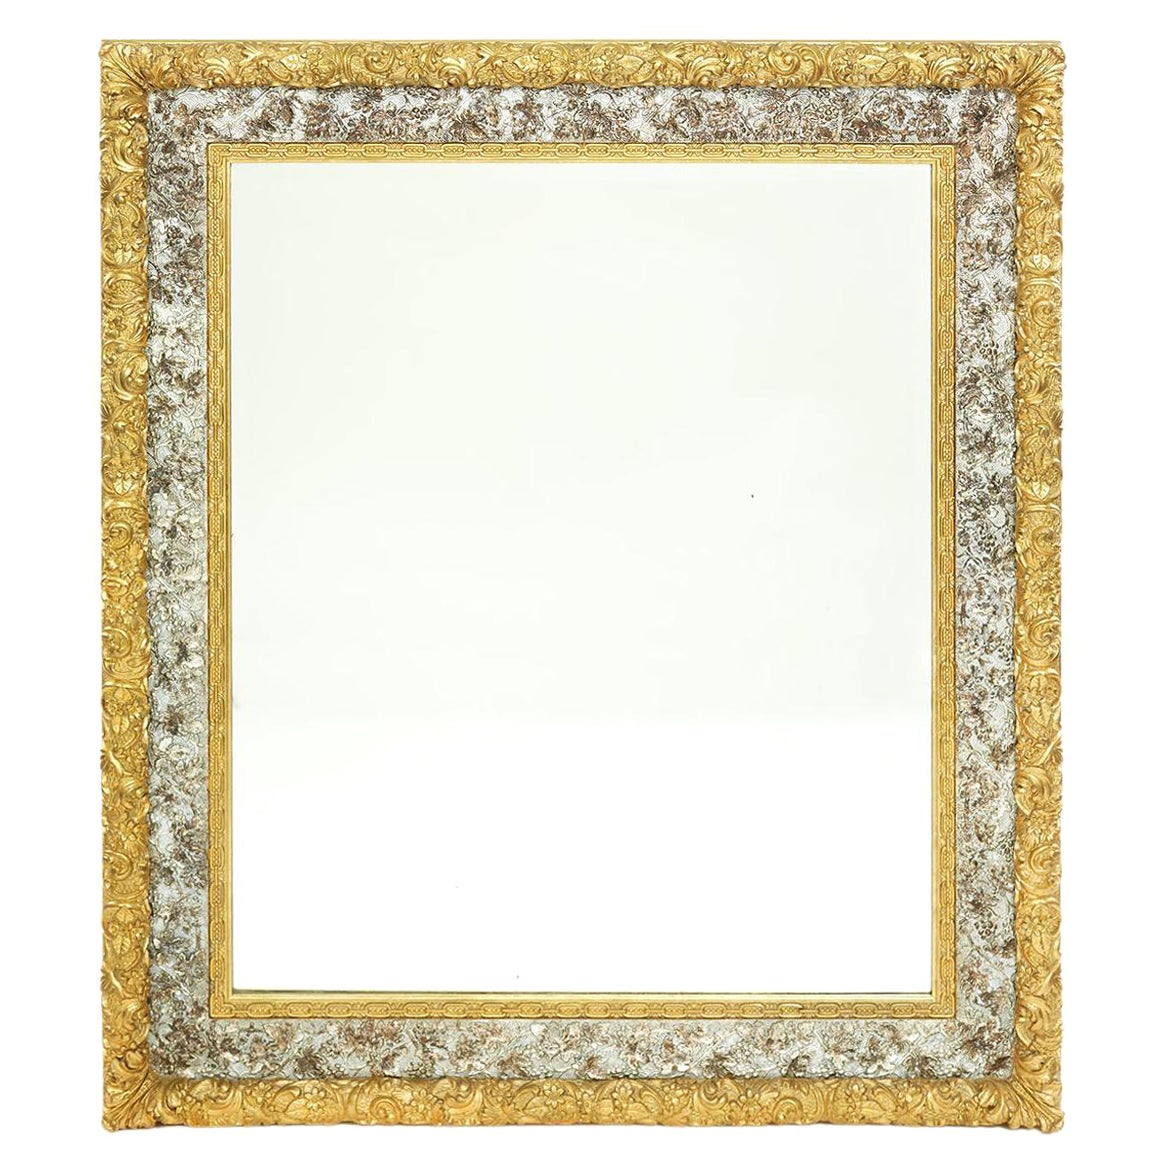 19th Century Gilt Wood Framed Beveled Wall Mirror